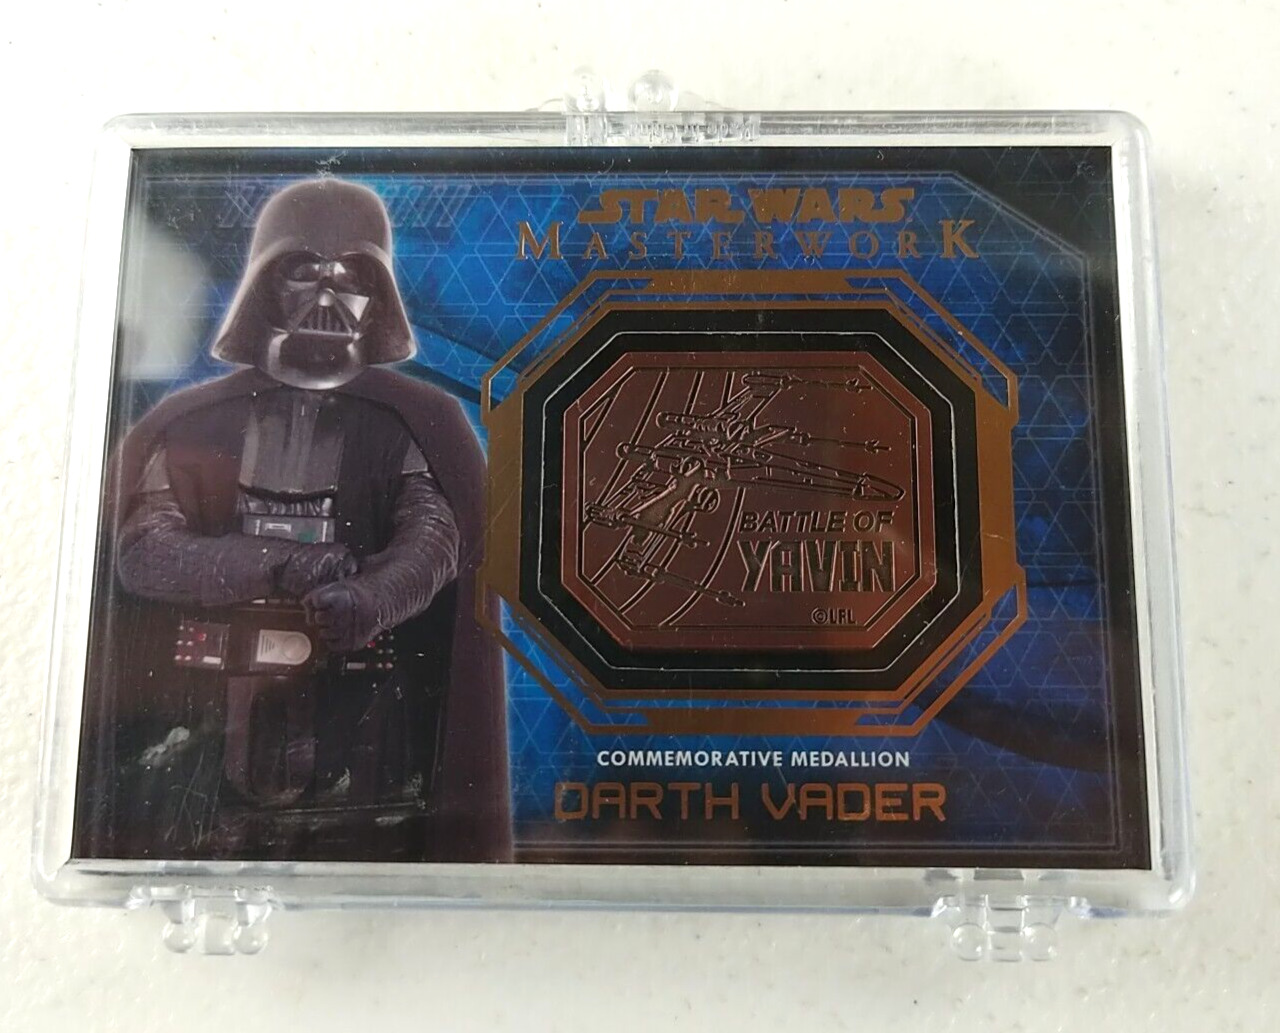 2016 Topps Star Wars Masterwork Darth Vader Yavin Commemorative Medallion Card